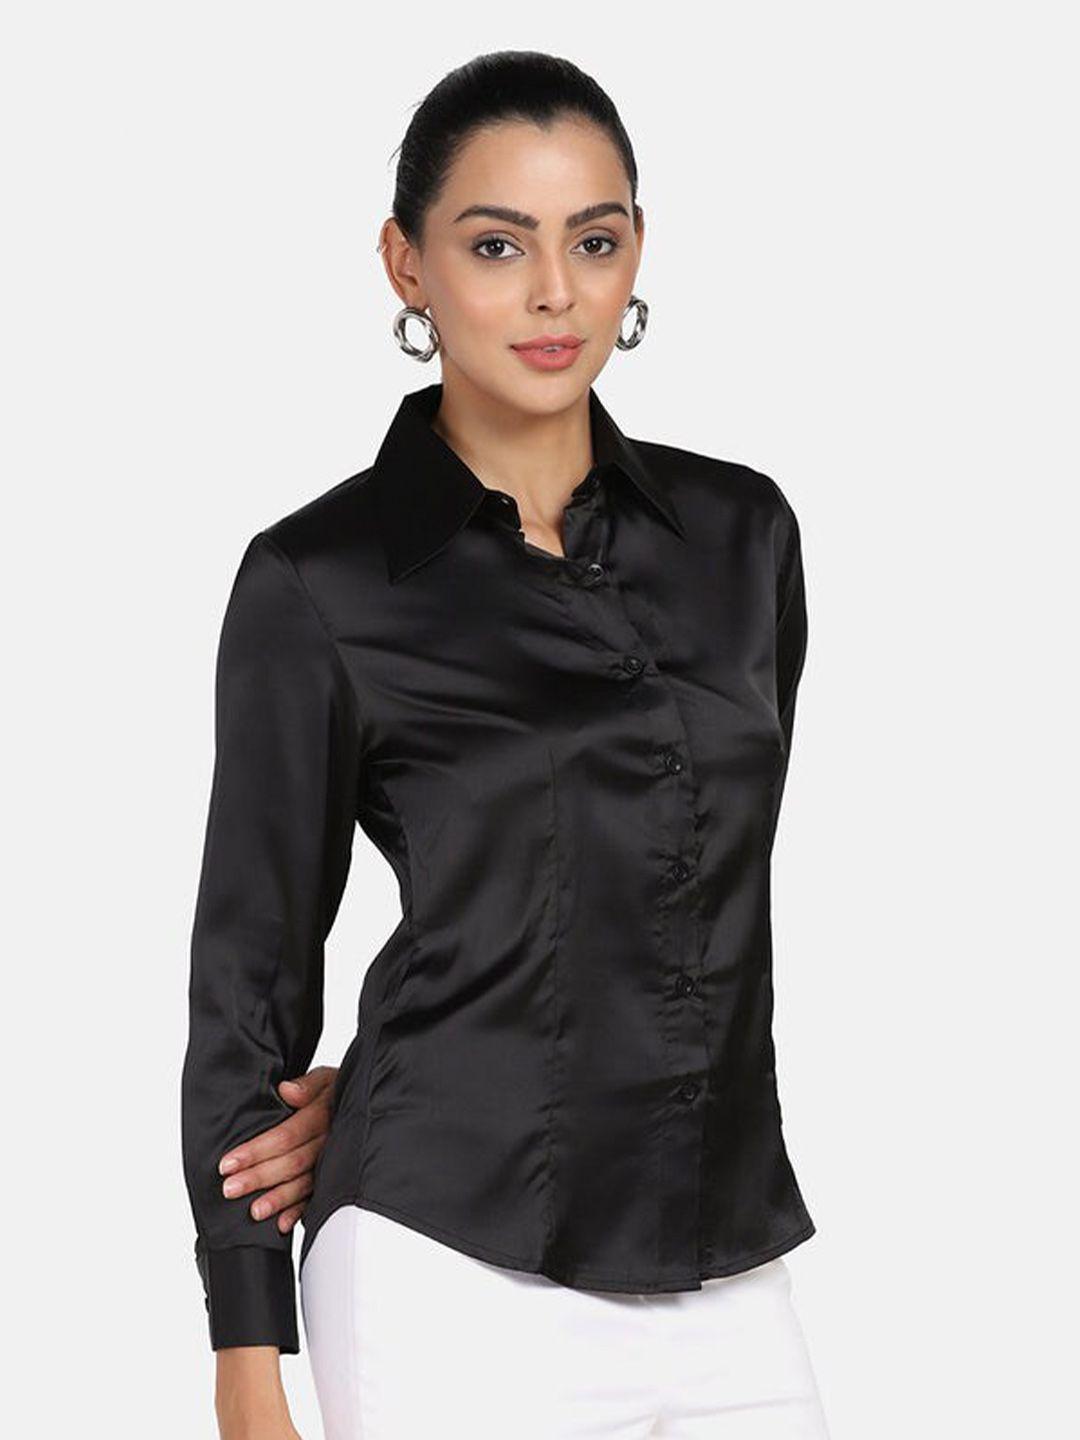 powersutra women black comfort casual shirt